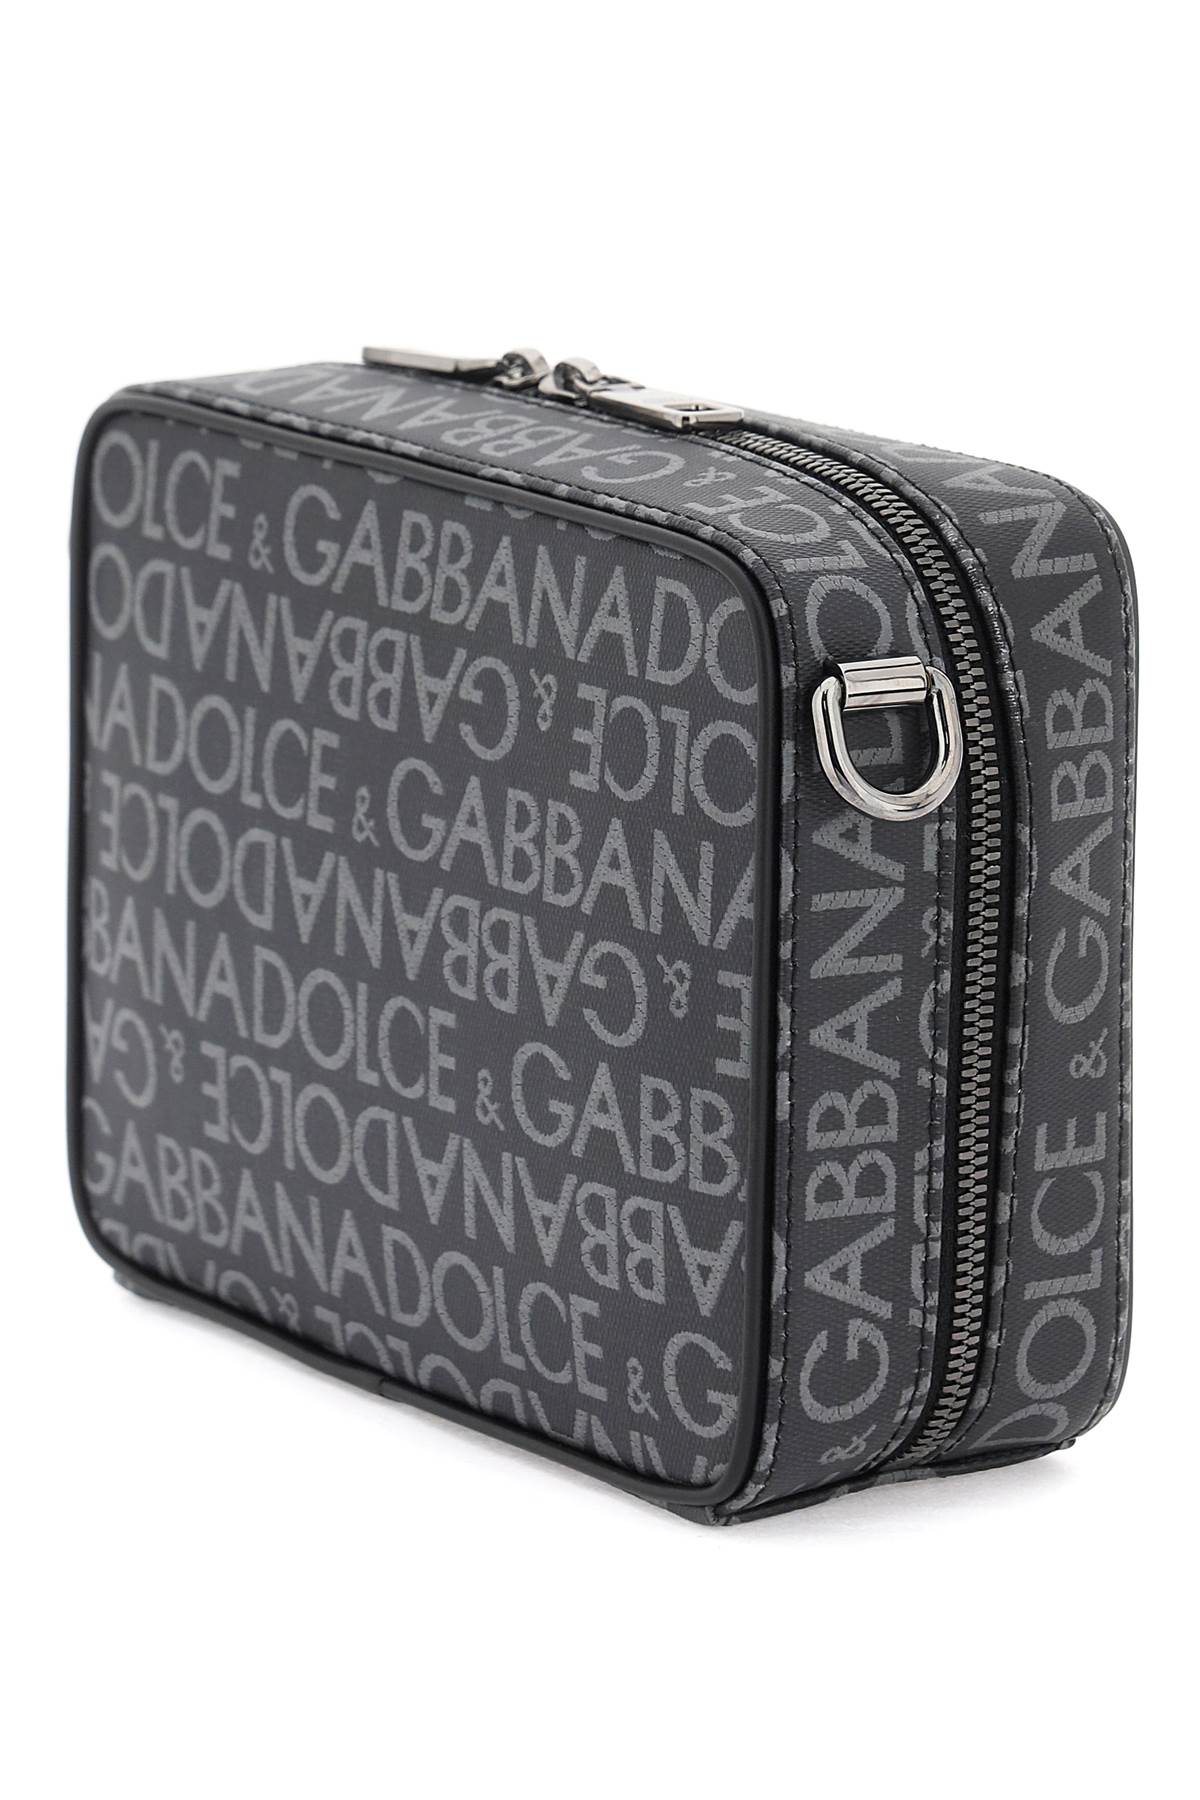 Dolce & gabbana coated jacquard messenger bag-1